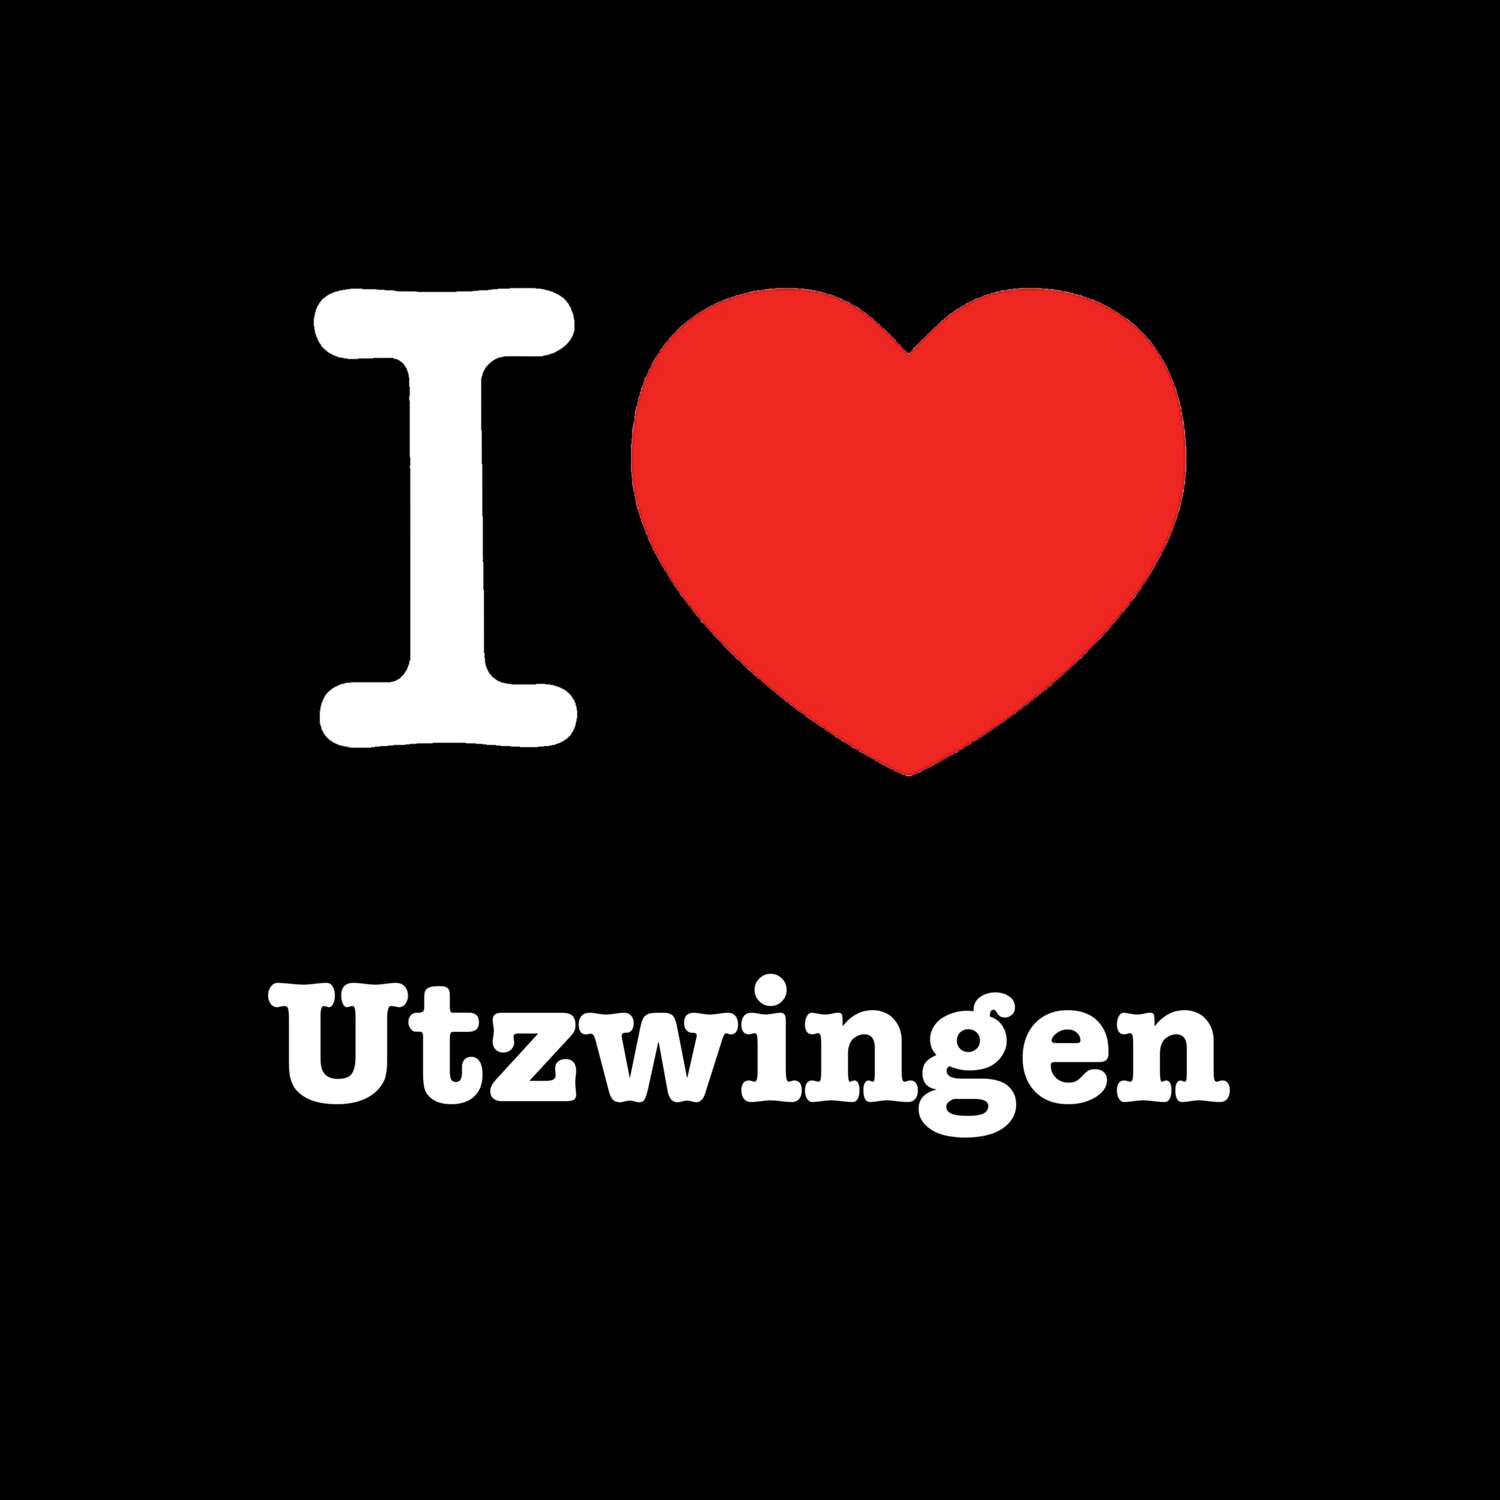 Utzwingen T-Shirt »I love«